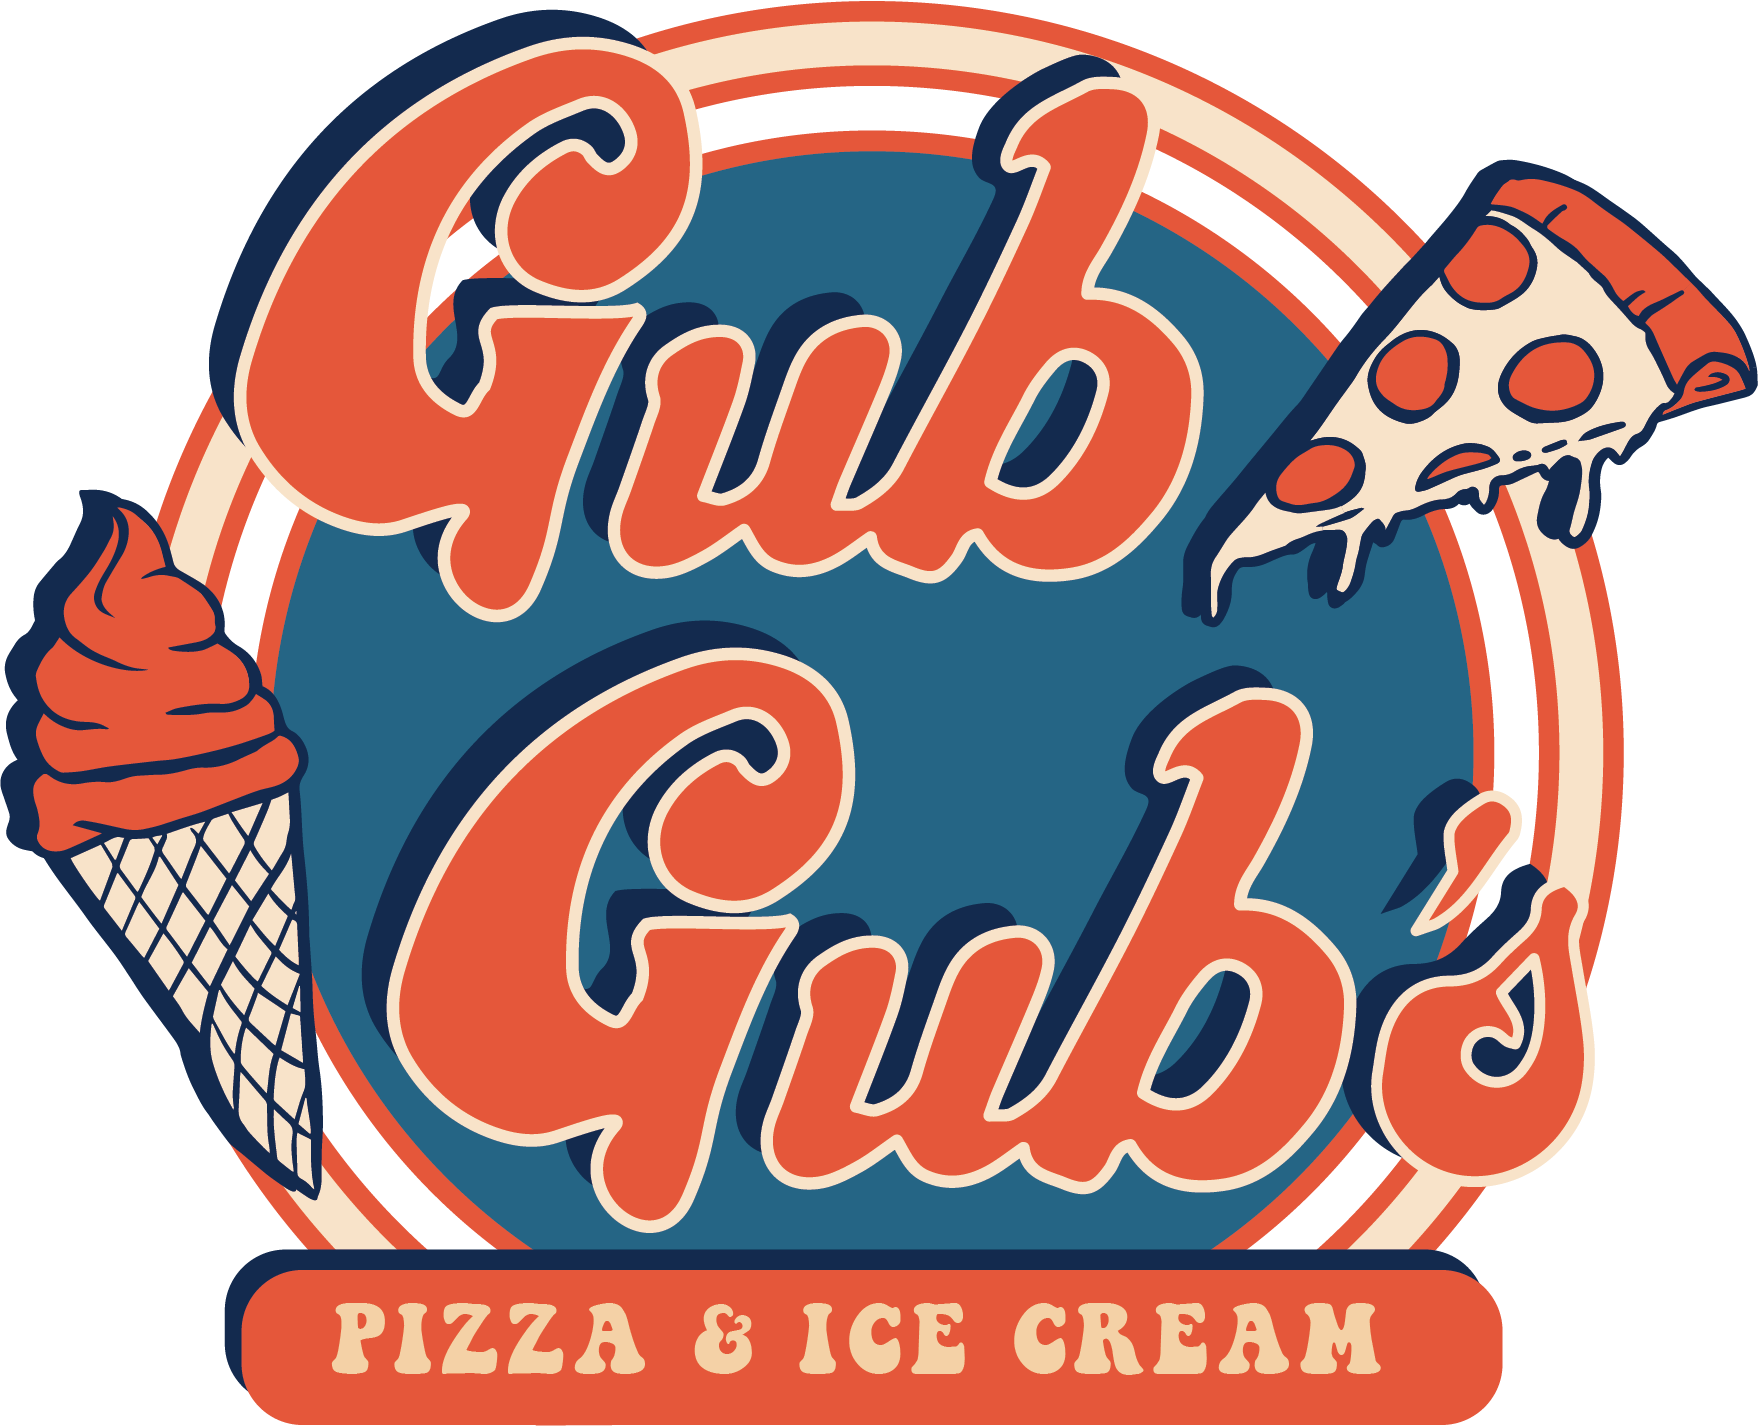 Gub Gub's